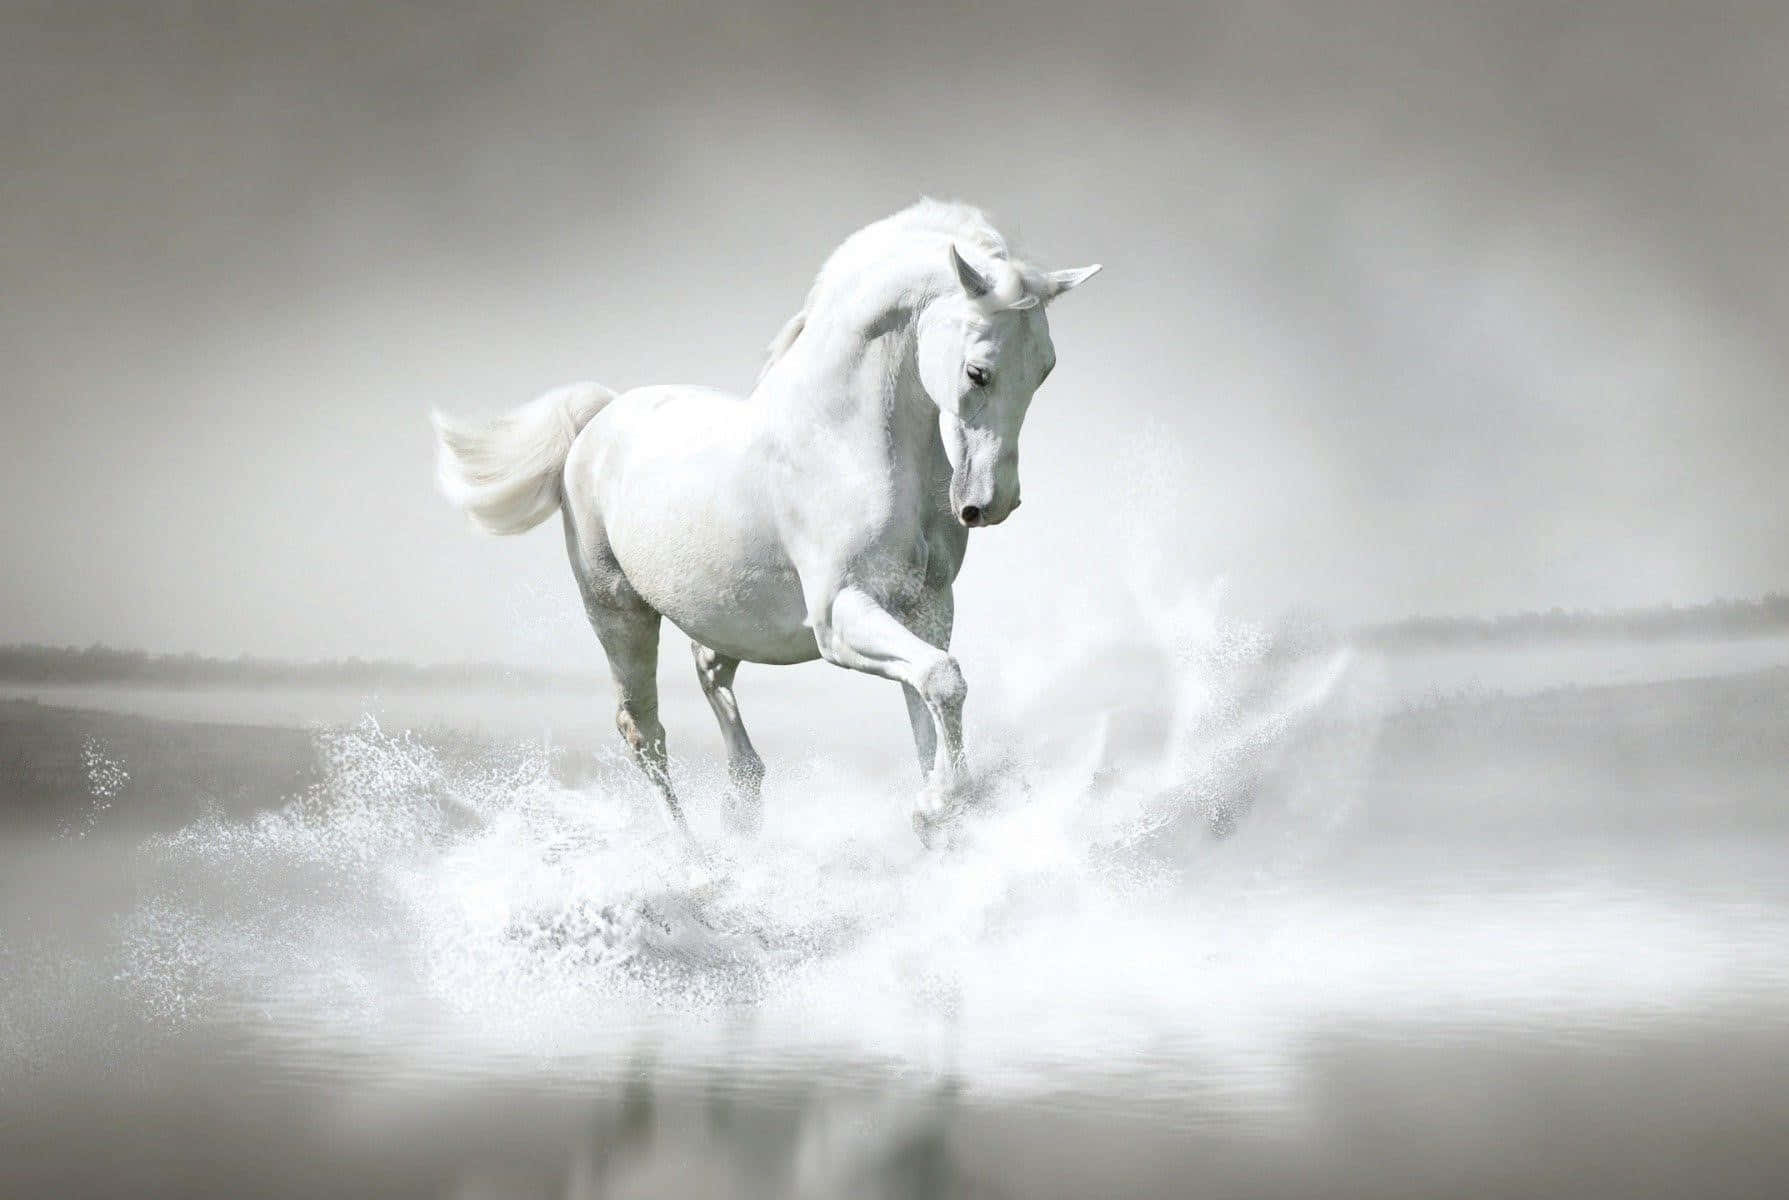 A wild white horse running through a grassy meadow